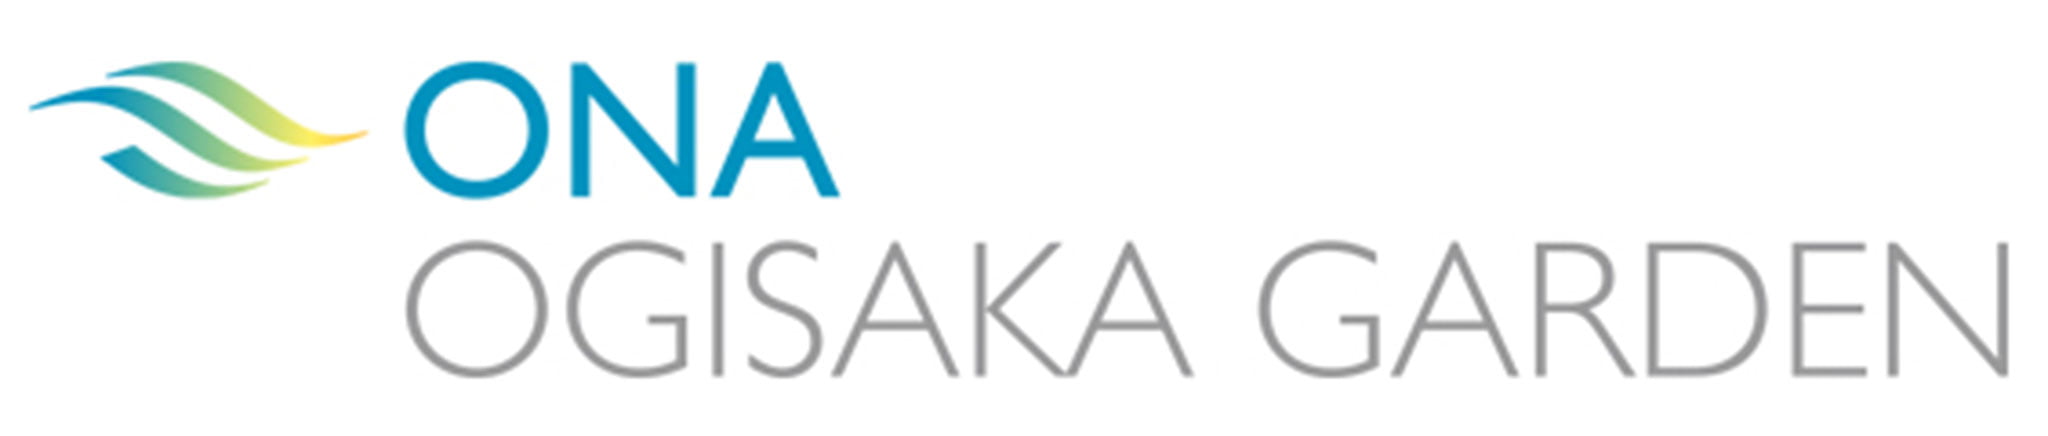 Logotipo Ona Ogisaka Garden